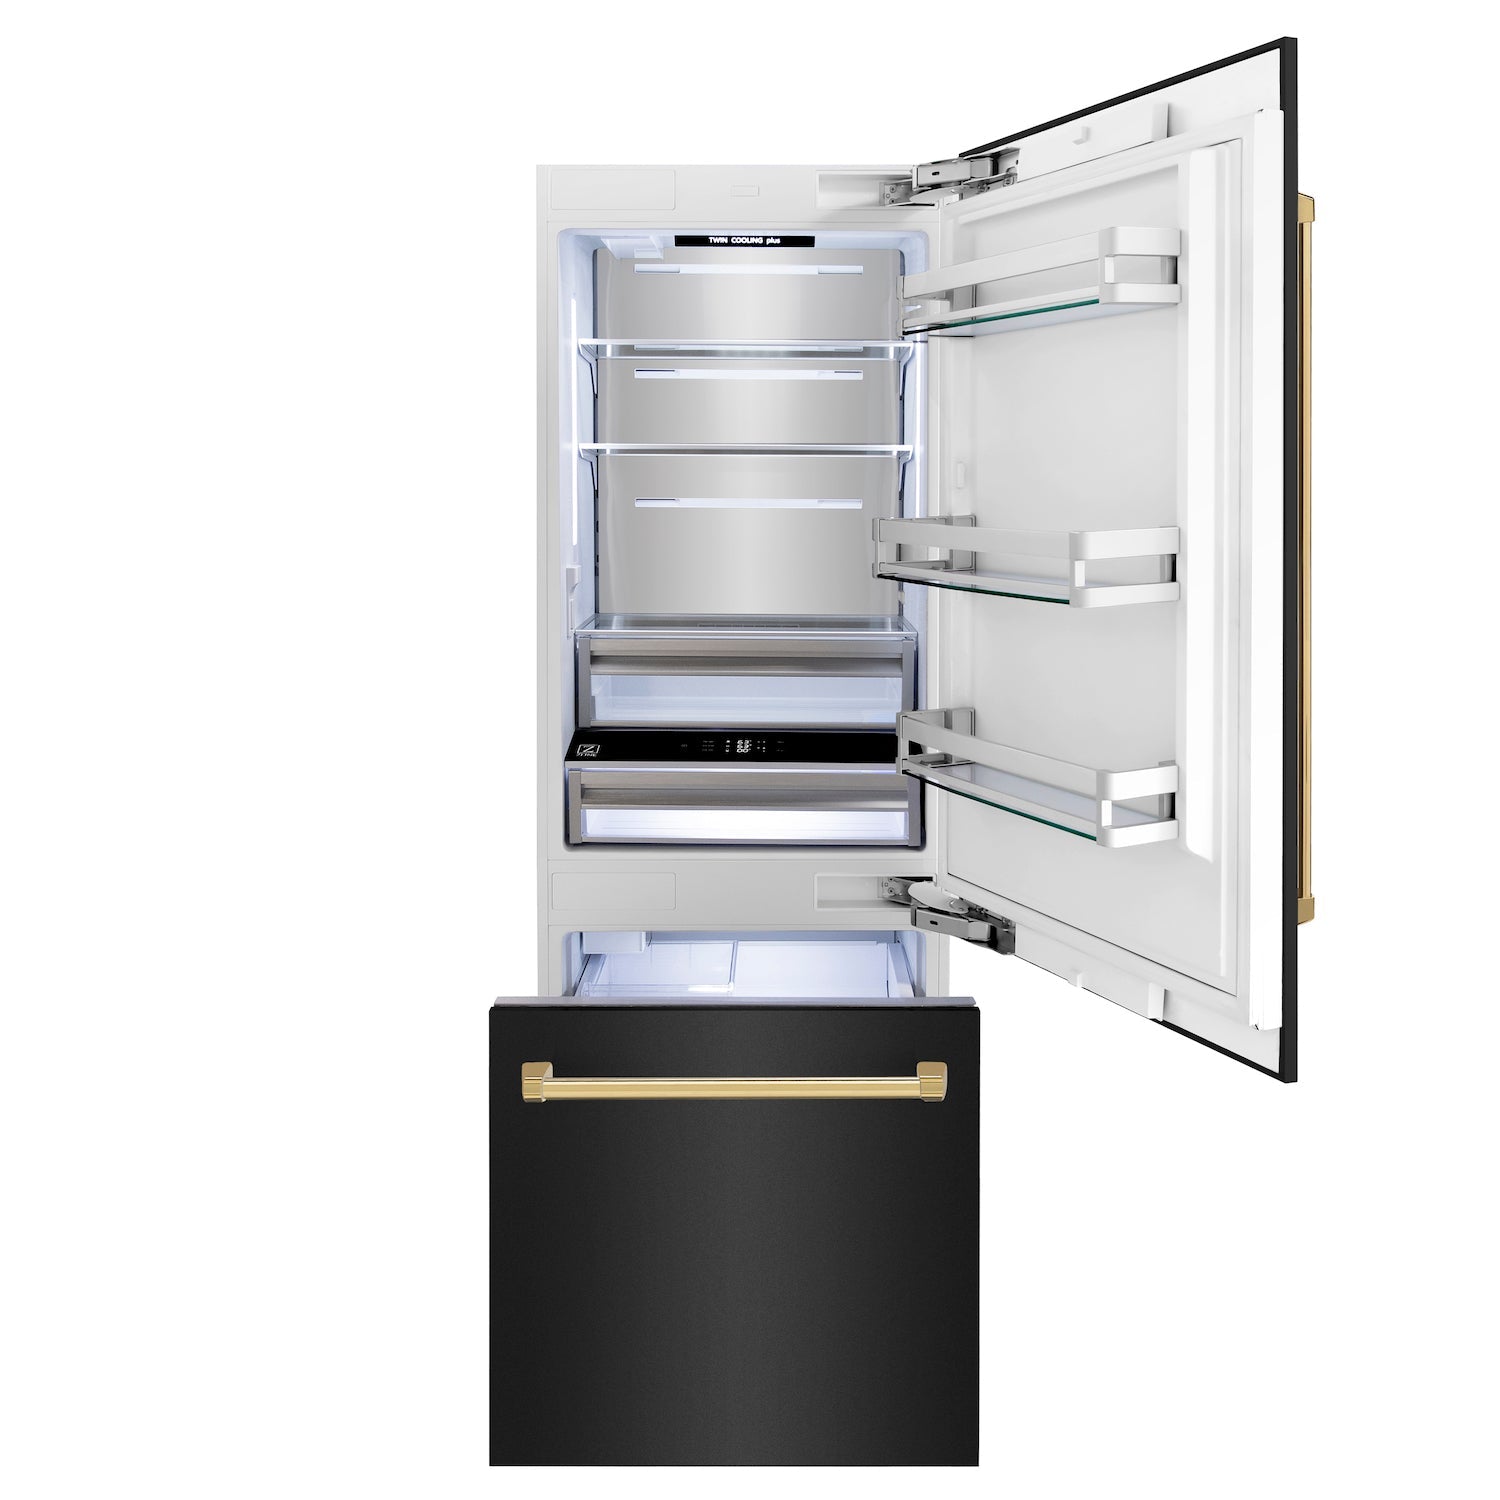 ZLINE 30" Autograph Edition Built-in 2-Door Bottom Freezer Refrigerator - Stainless Steel, Internal Water and Ice Dispenser